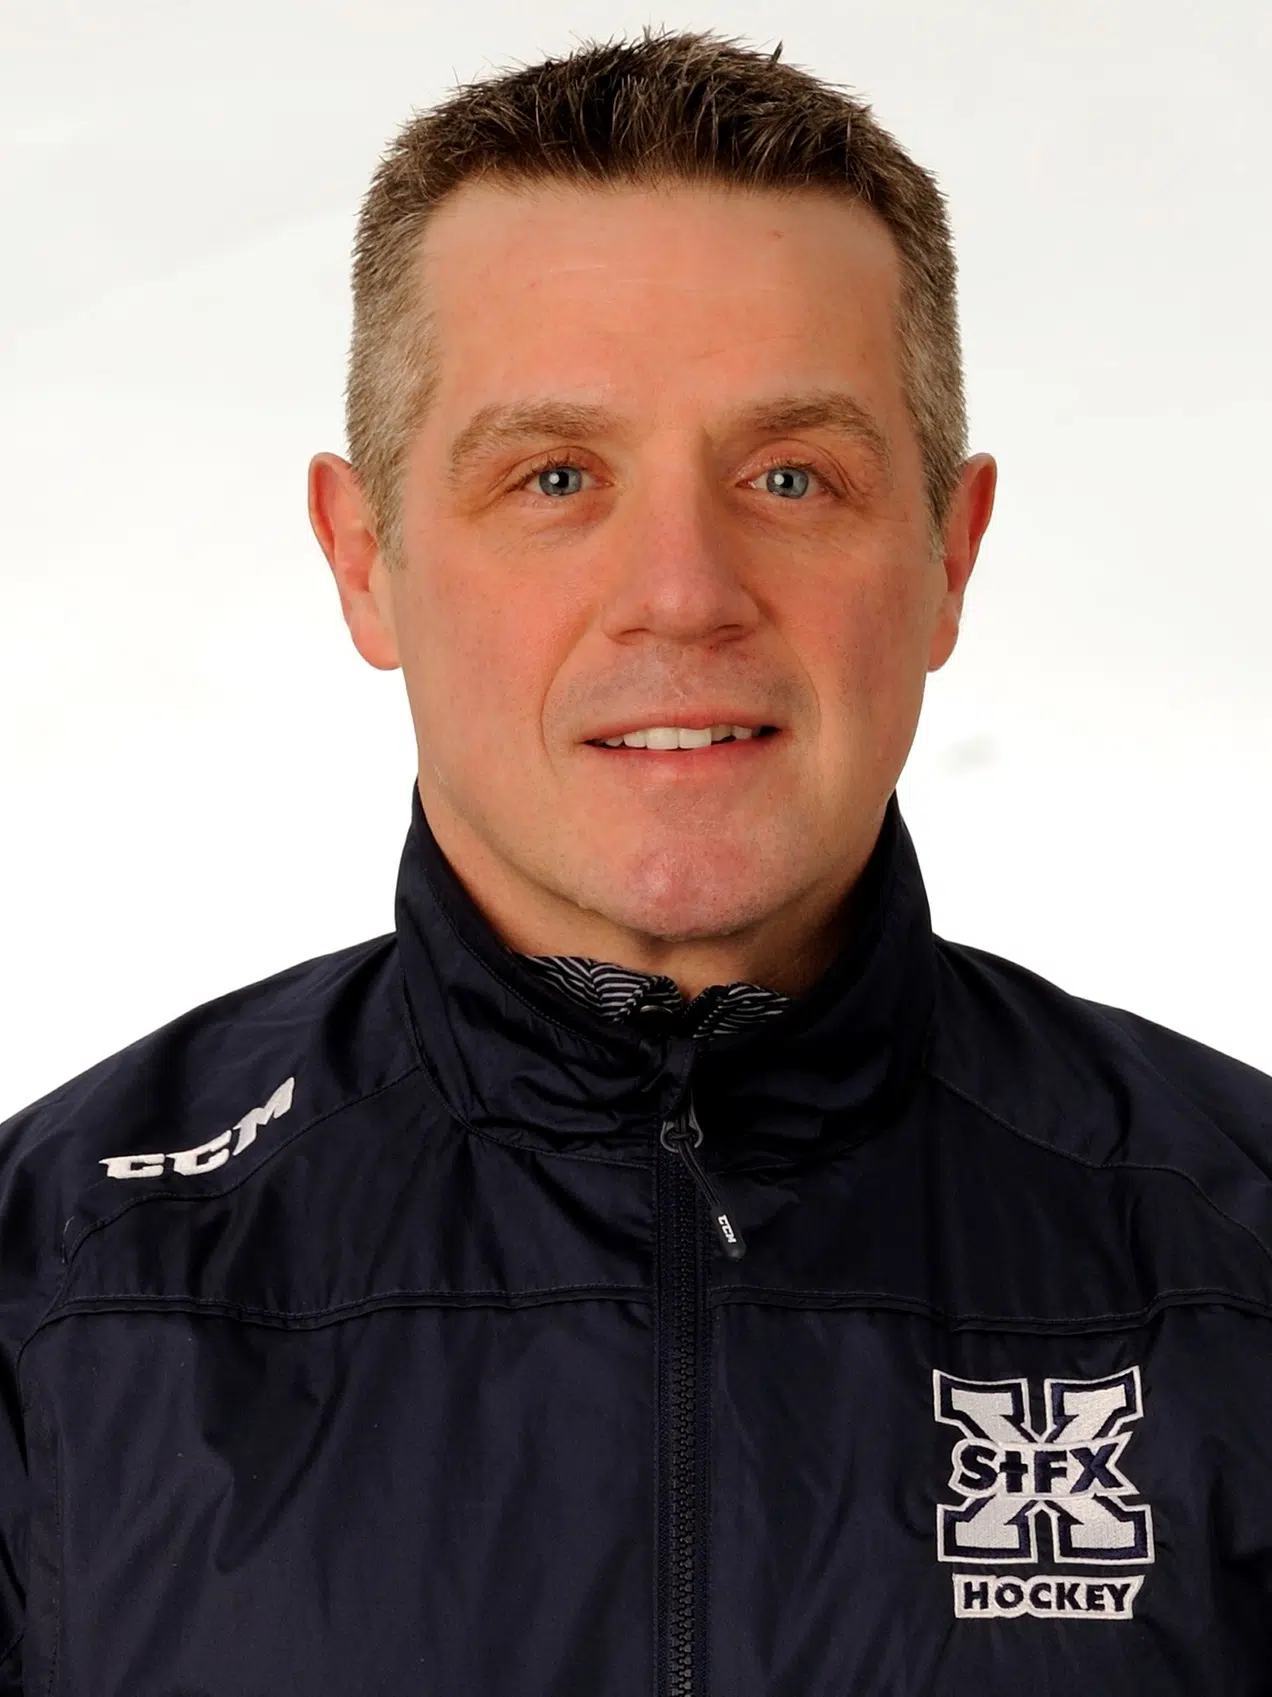 Brad Peddle steps down as STFX men's hockey coach